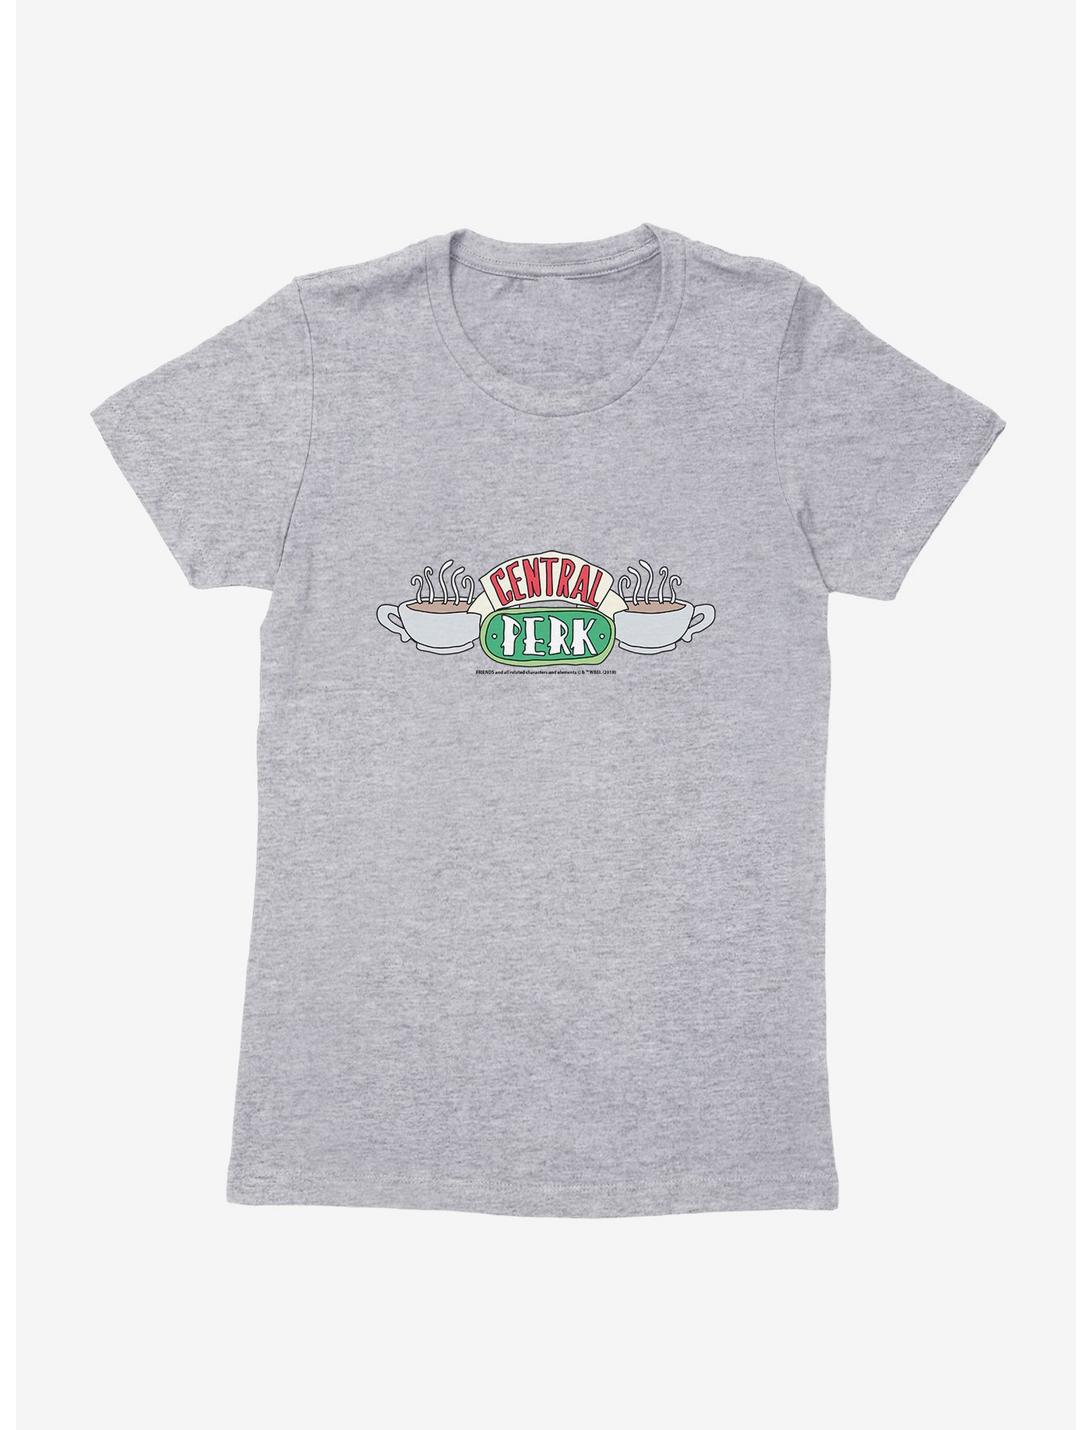 Friends Central Perk Sign Womens T-Shirt, HEATHER, hi-res